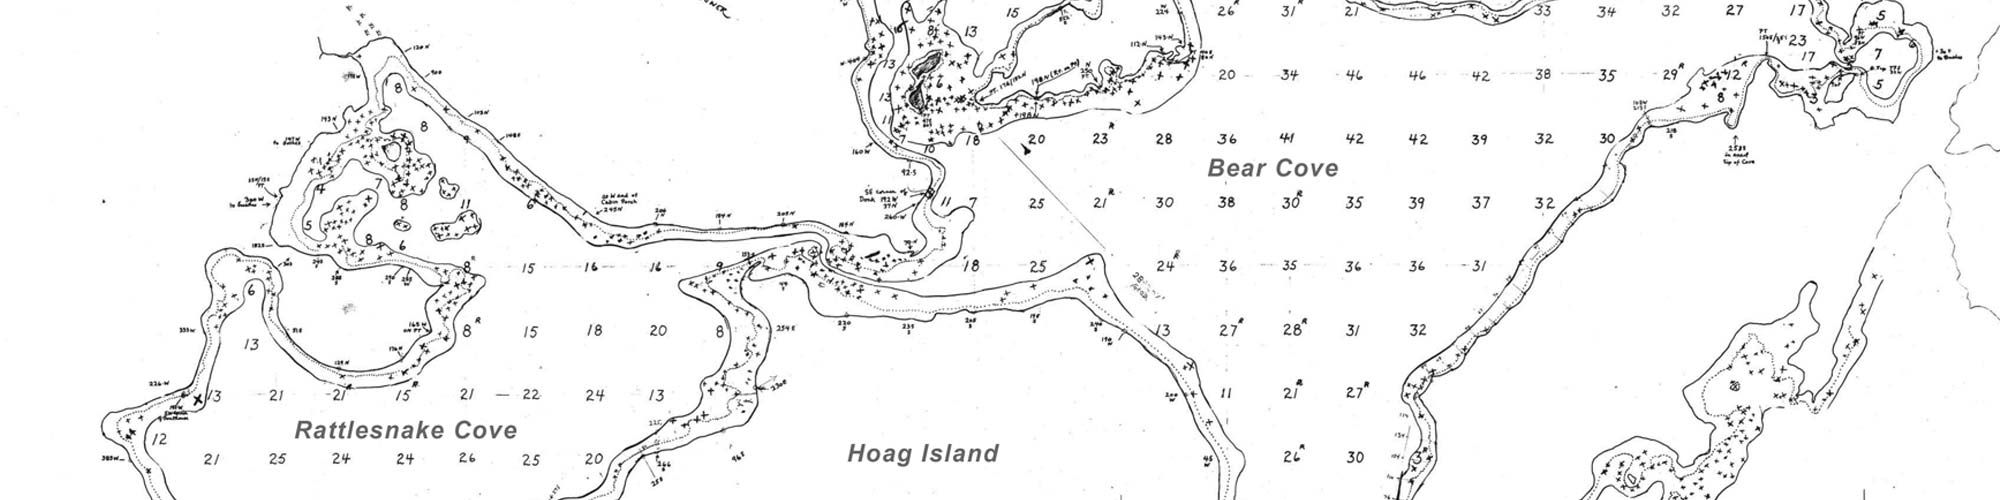 Squam Lake Map by Brad Washbrn - Hoag Island to Squaw Cove